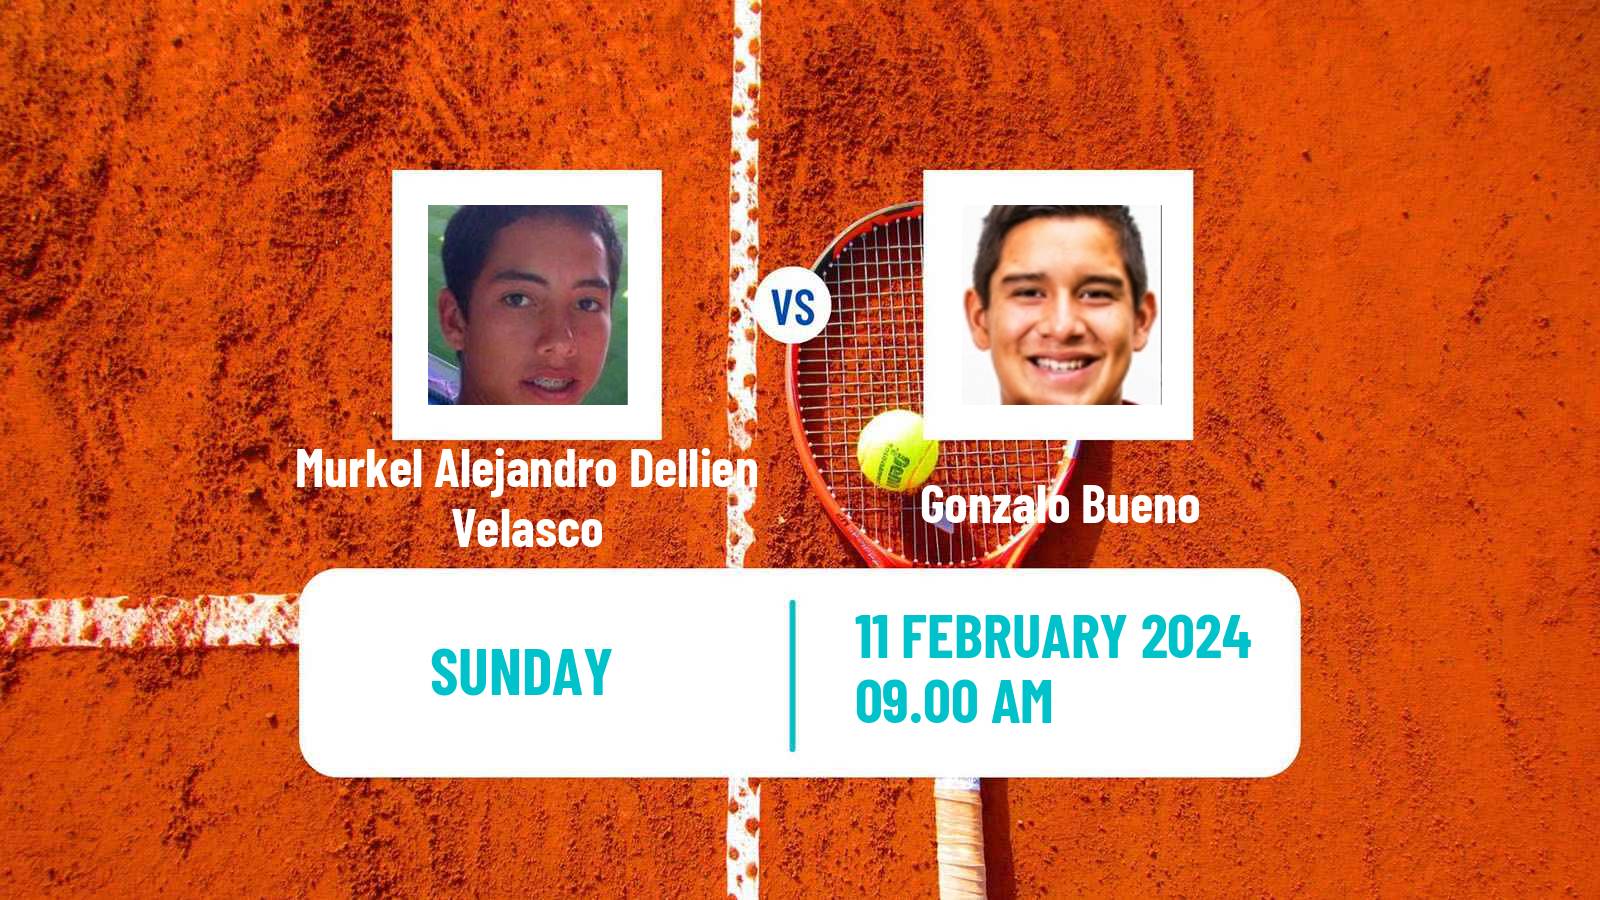 Tennis ITF M25 Punta Del Este Men Murkel Alejandro Dellien Velasco - Gonzalo Bueno